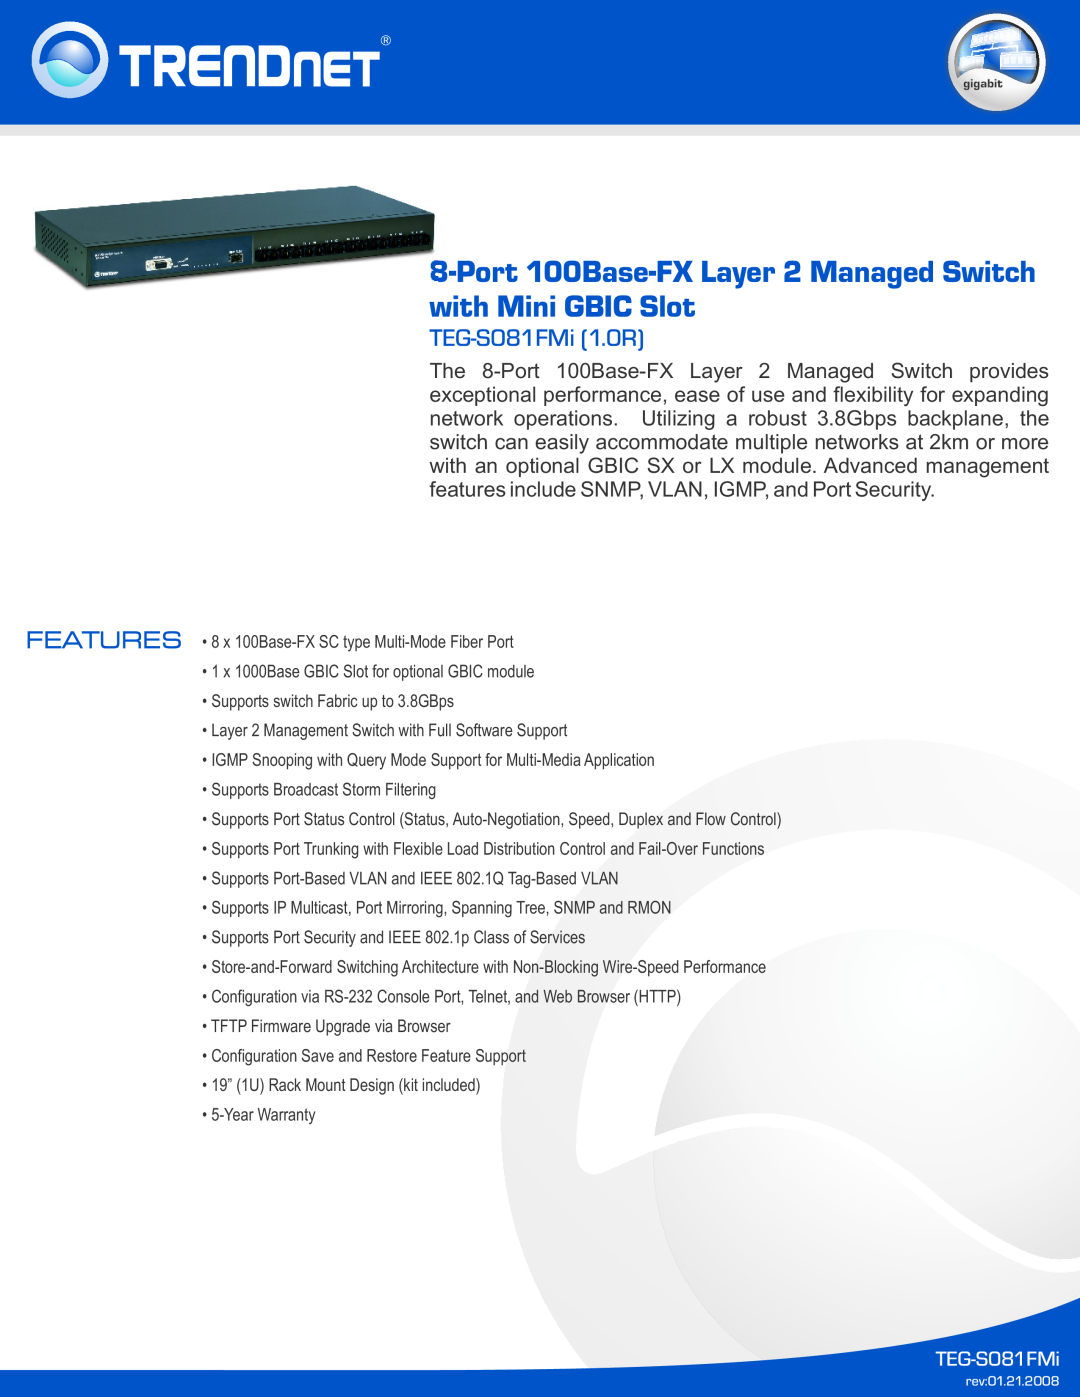 TRENDnet warranty Port 100Base-FX Layer 2 Managed Switch with Mini GBIC Slot, TEG-S081FMi 1.0R 